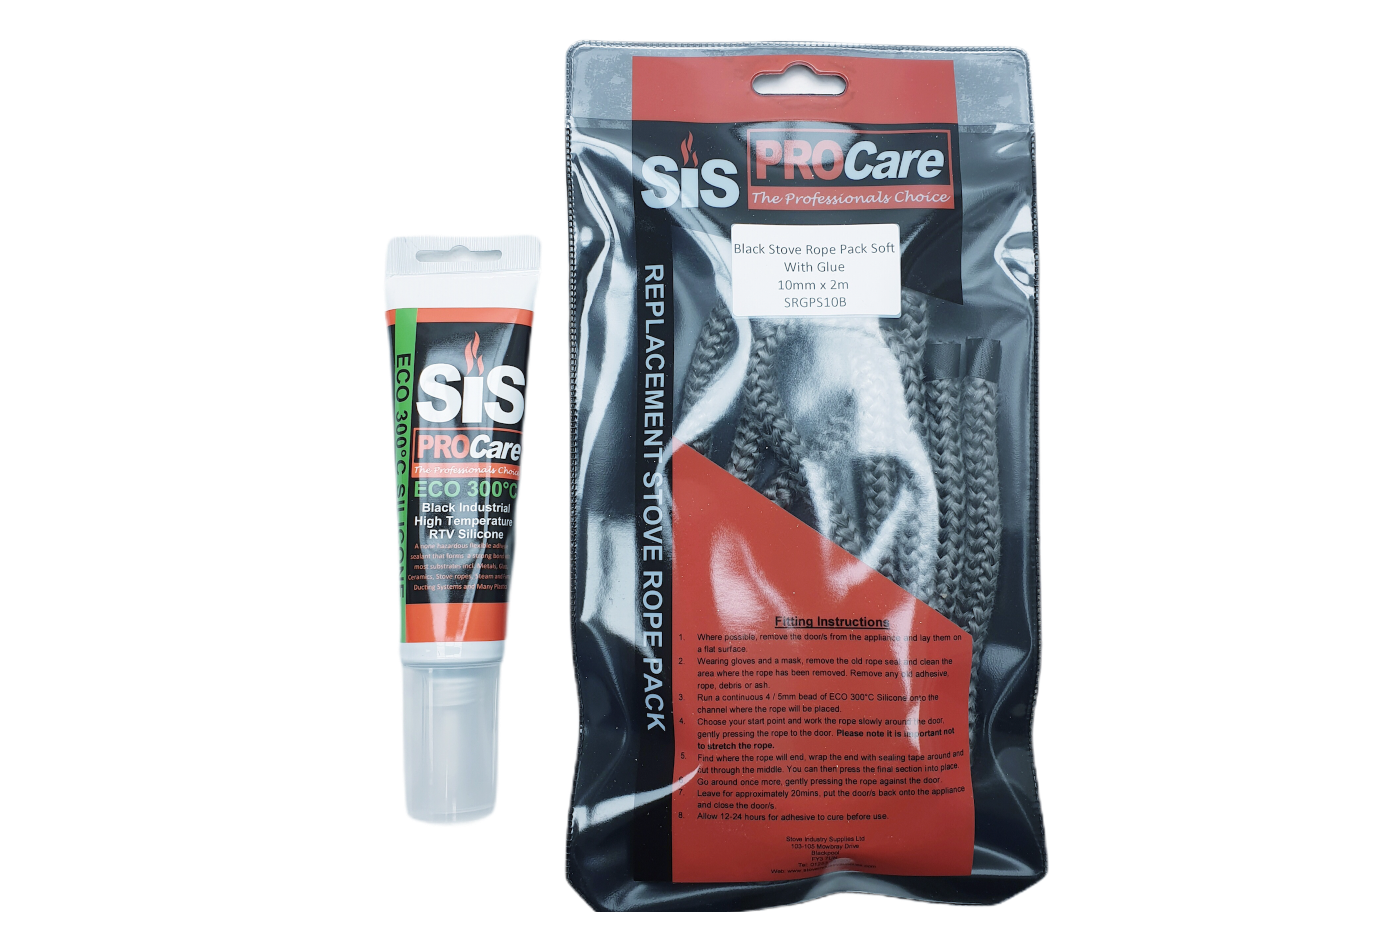 SiS Procare Black 10 milimetre x 2 metre Black Soft Stove Rope & 80 millilitre Rope Glue Pack